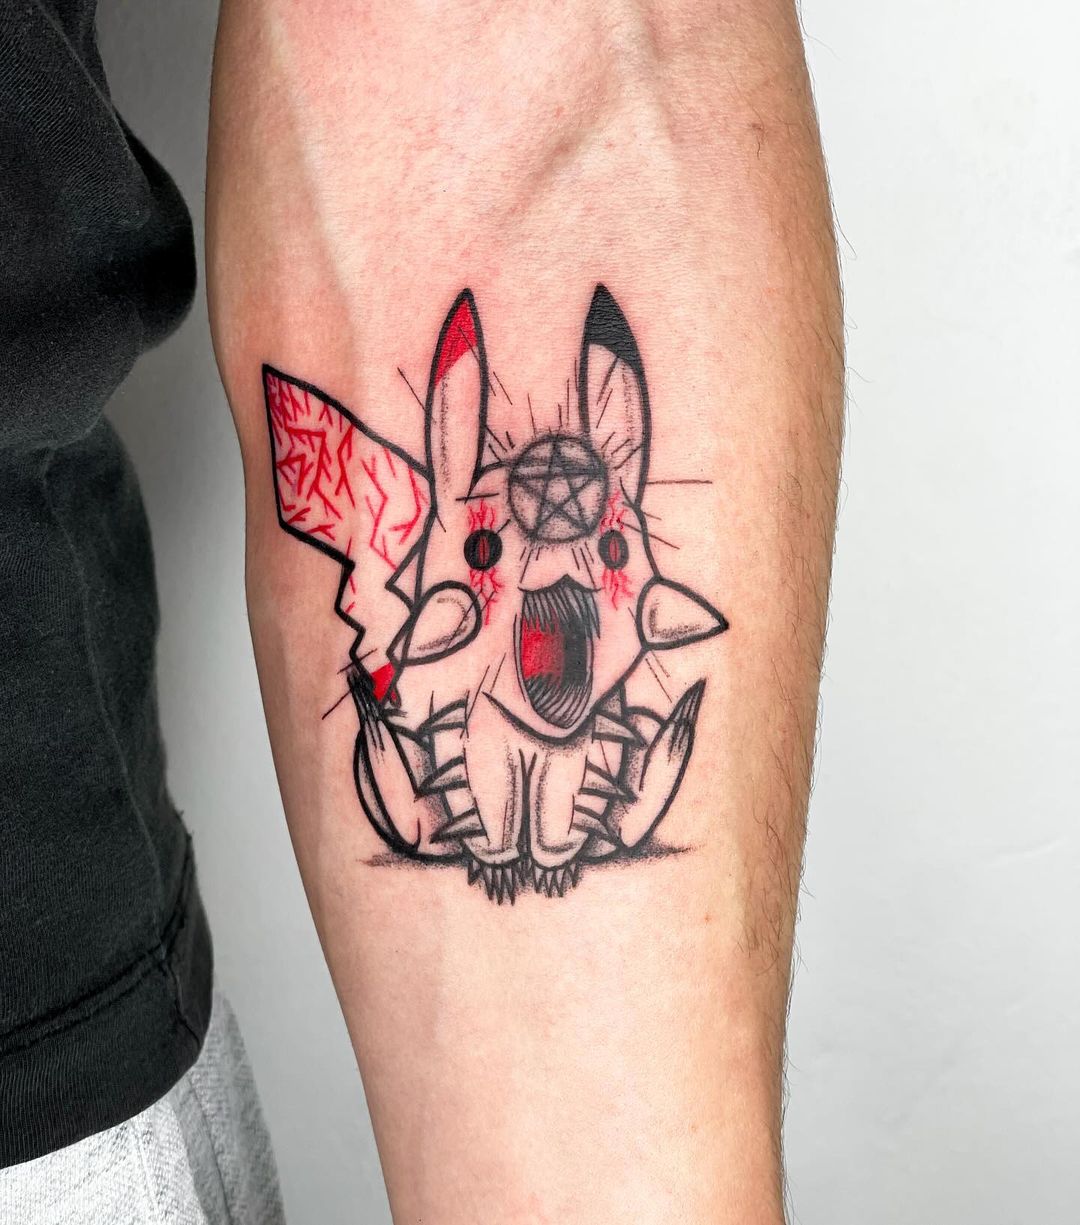 Pikachu tattoo on forearm by